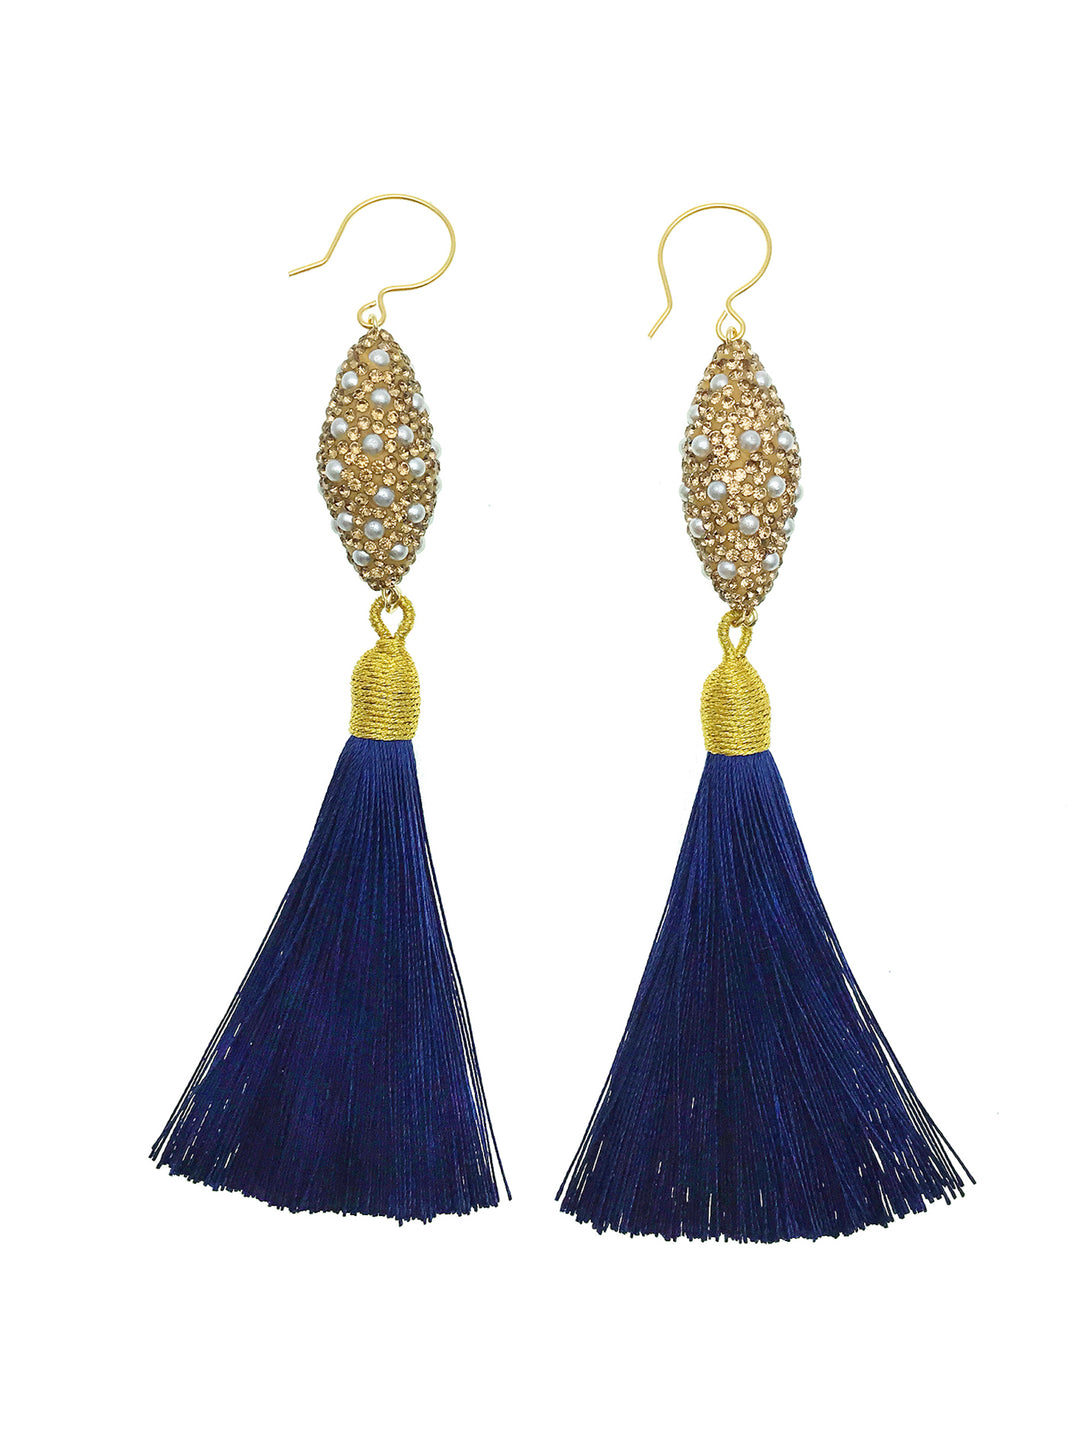 Rhinestones Bordered Pearls With Deep Blue Tassel Earrings CE003 - FARRA